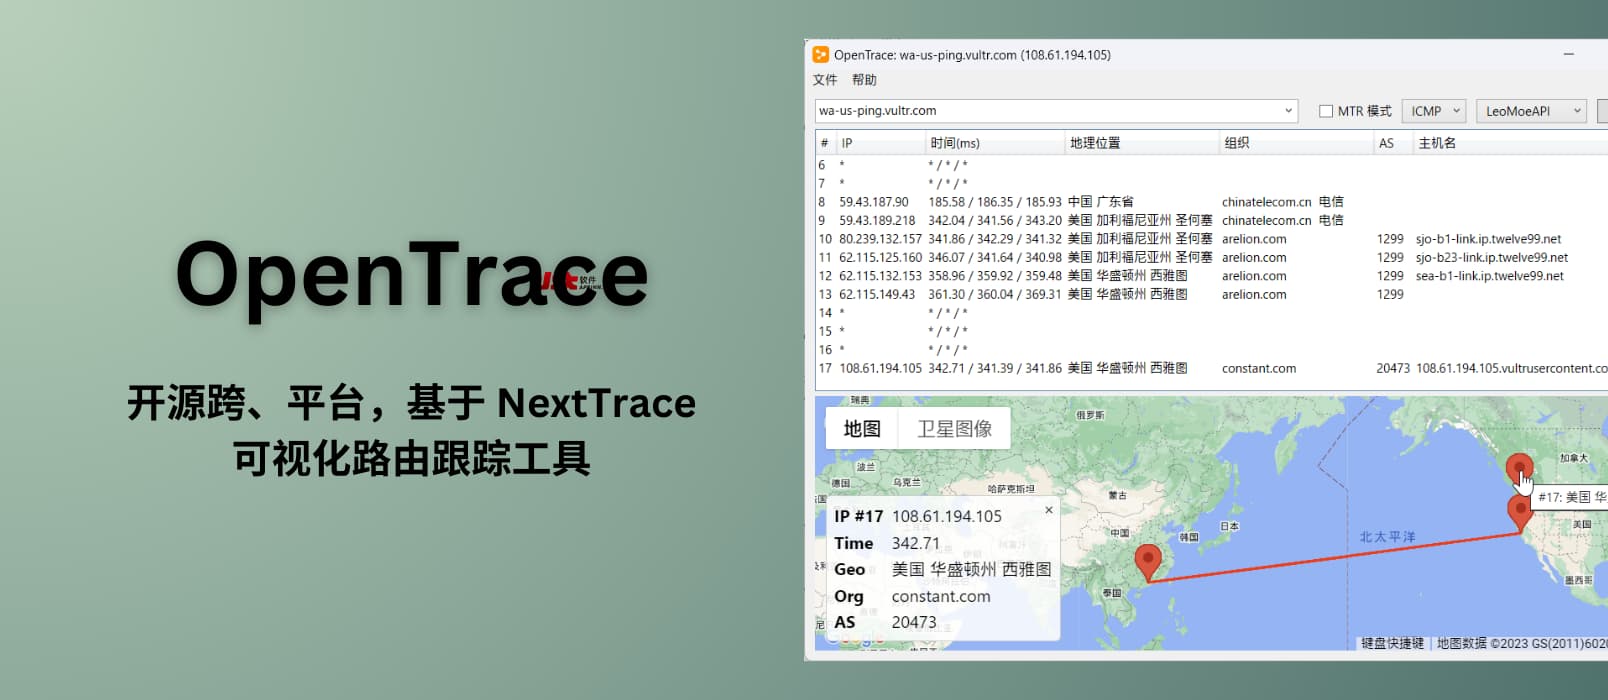 OpenTracev1.9.3 可视化路由跟踪工具，在地图上追踪并显示 IP 地址